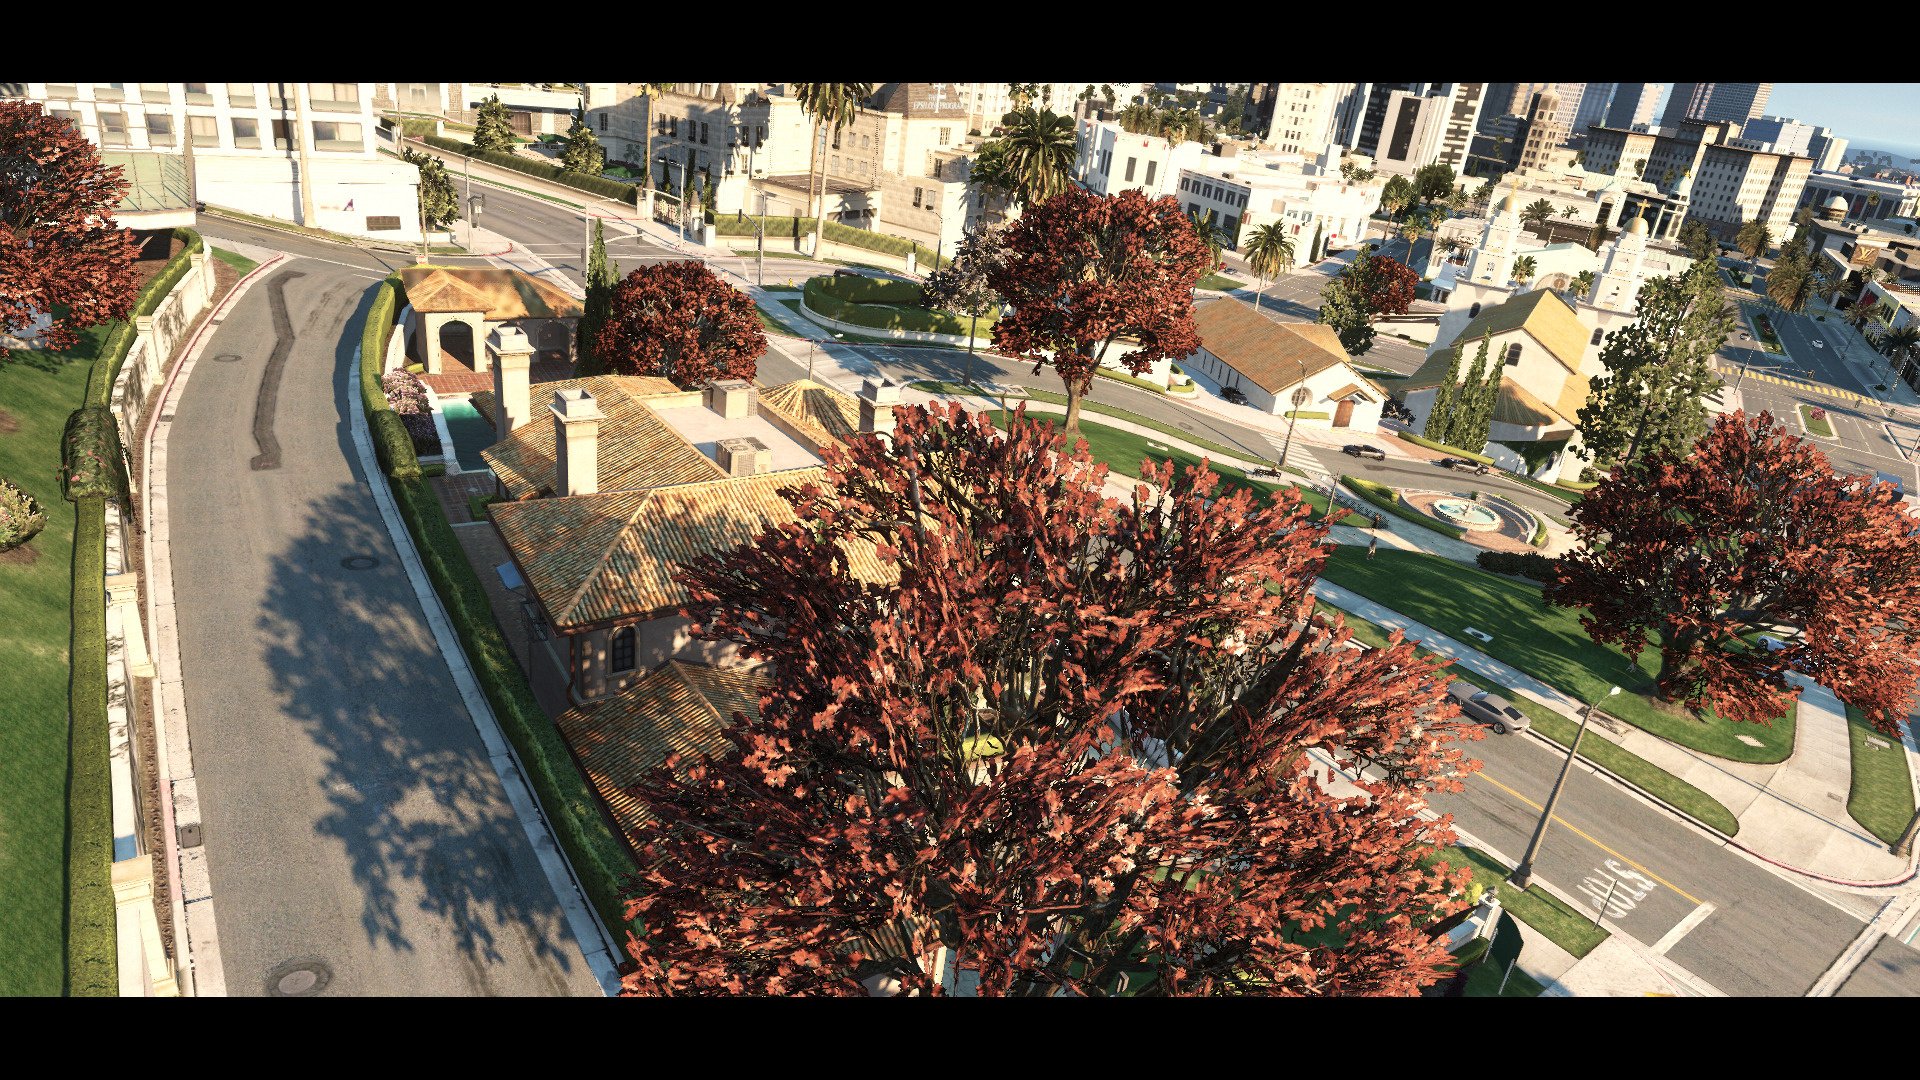 GTA 5 Mod Chomper Plants Zombies - GTA 5 Mods Website